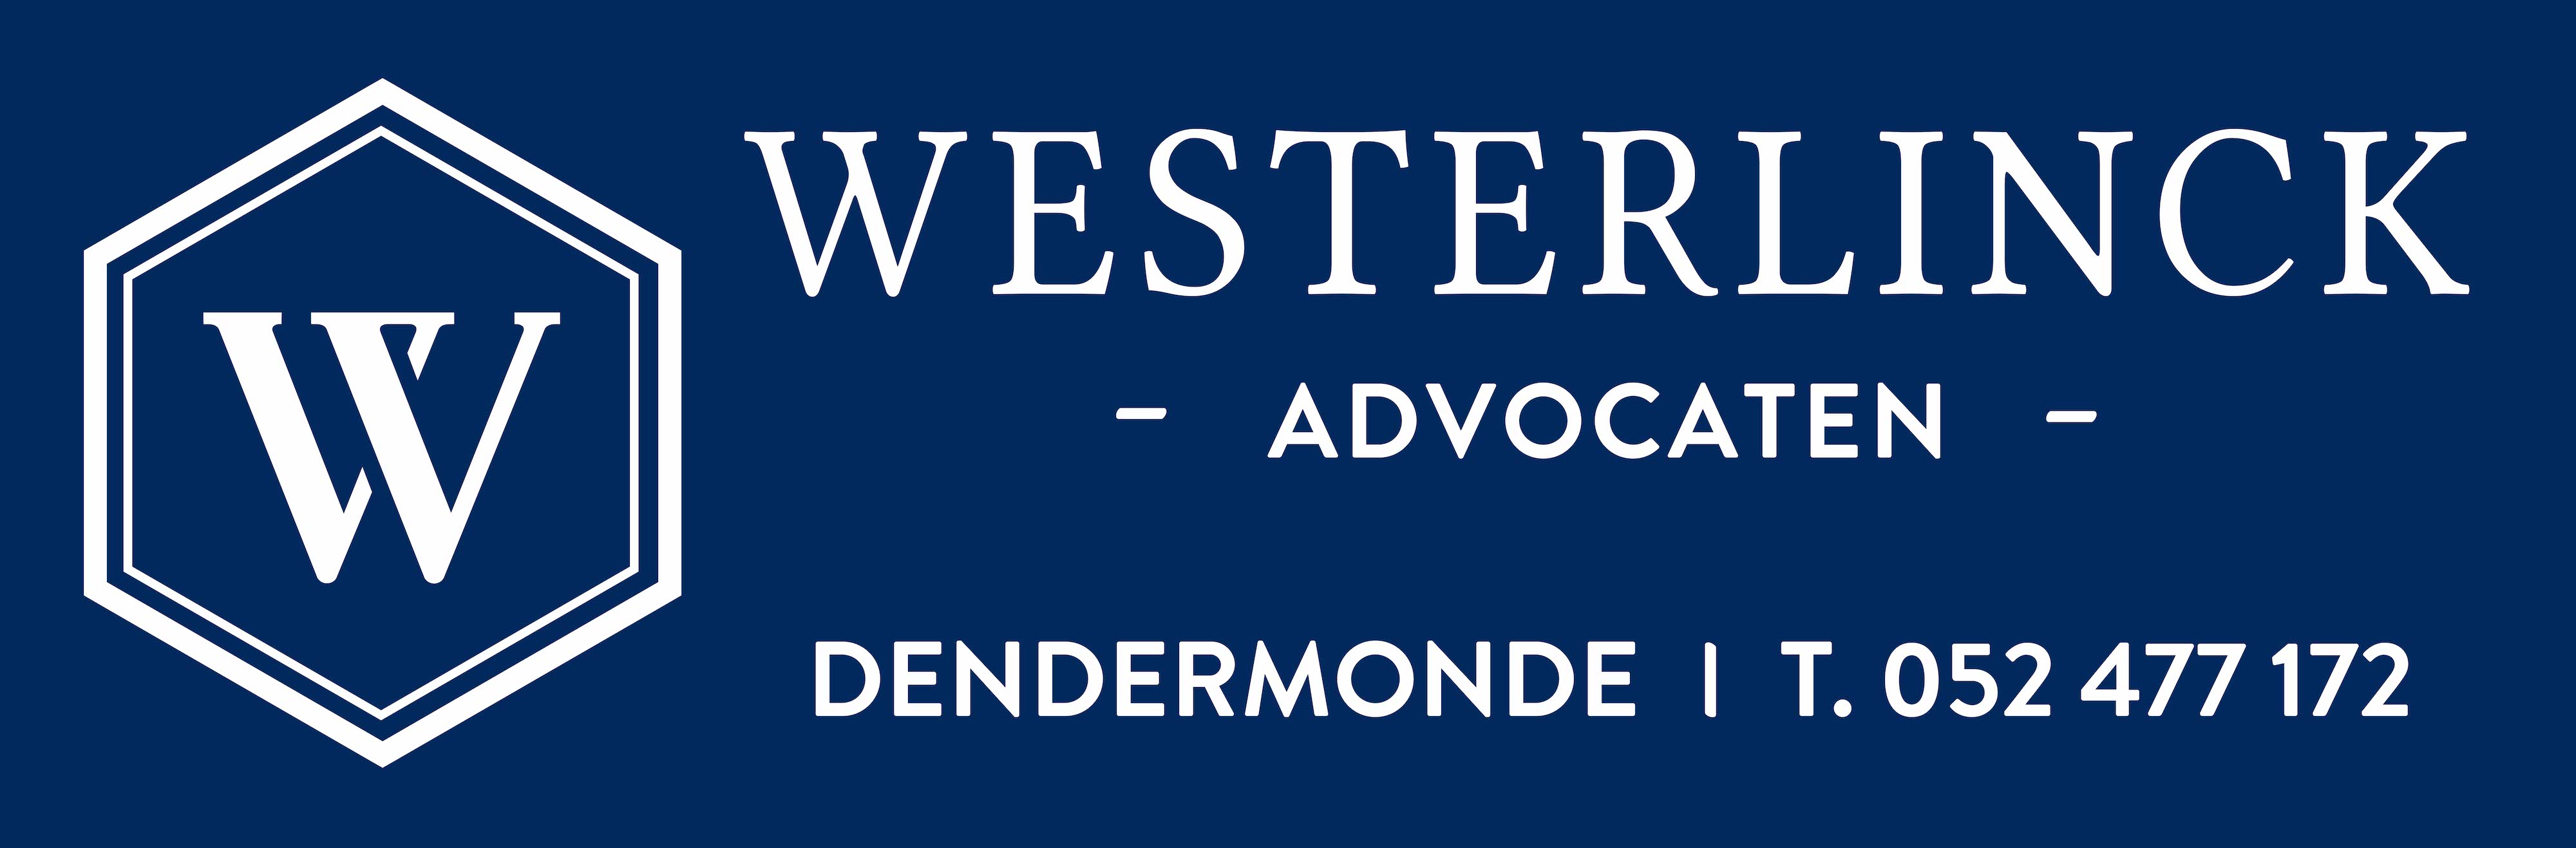 Westerlinck-Advocaten-logo-def